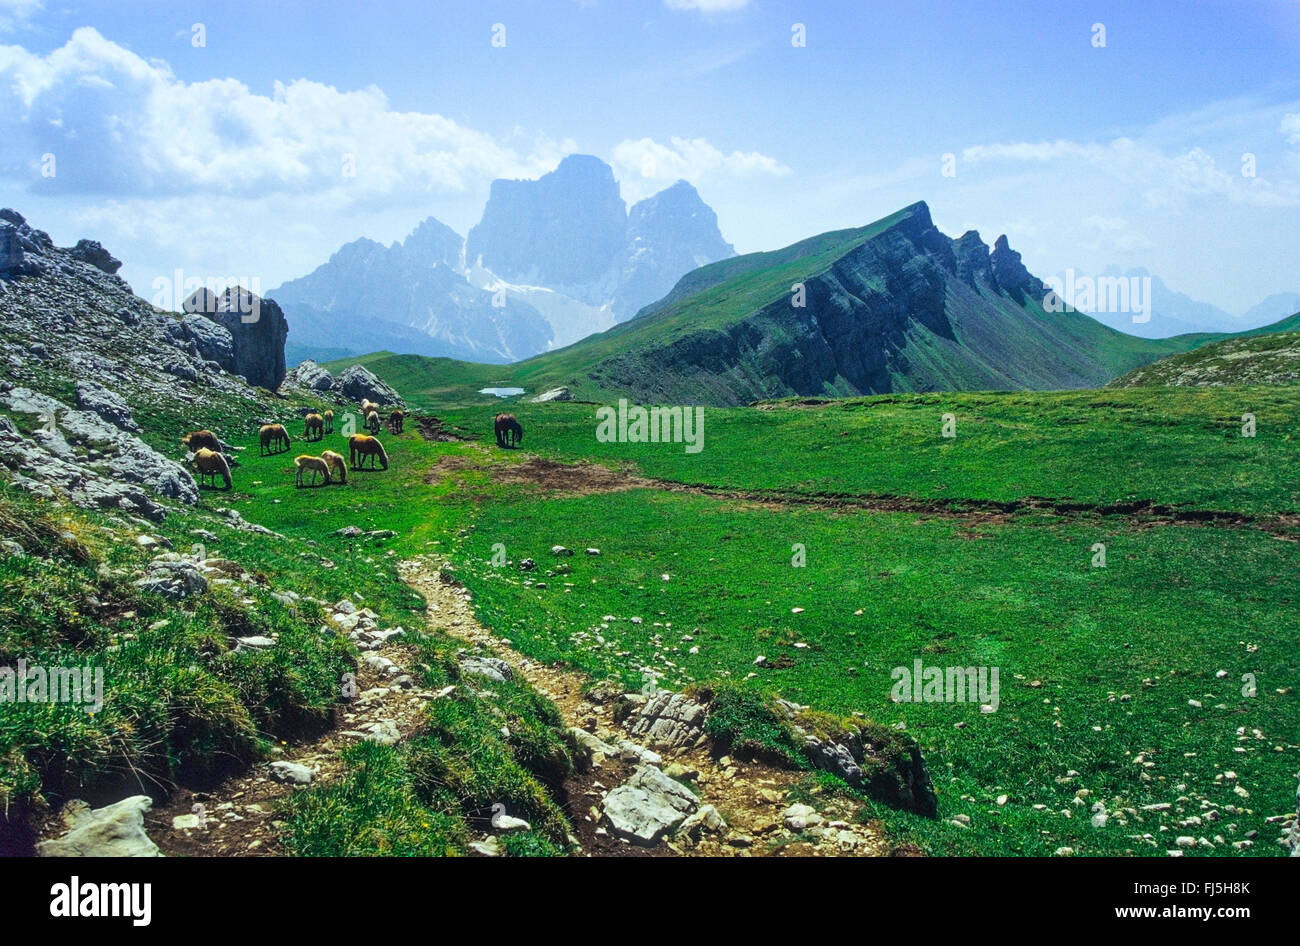 half-wild horses grazing on alpine pasture, Mount Pelmo in background, Italy, South Tyrol, Dolomites Stock Photo